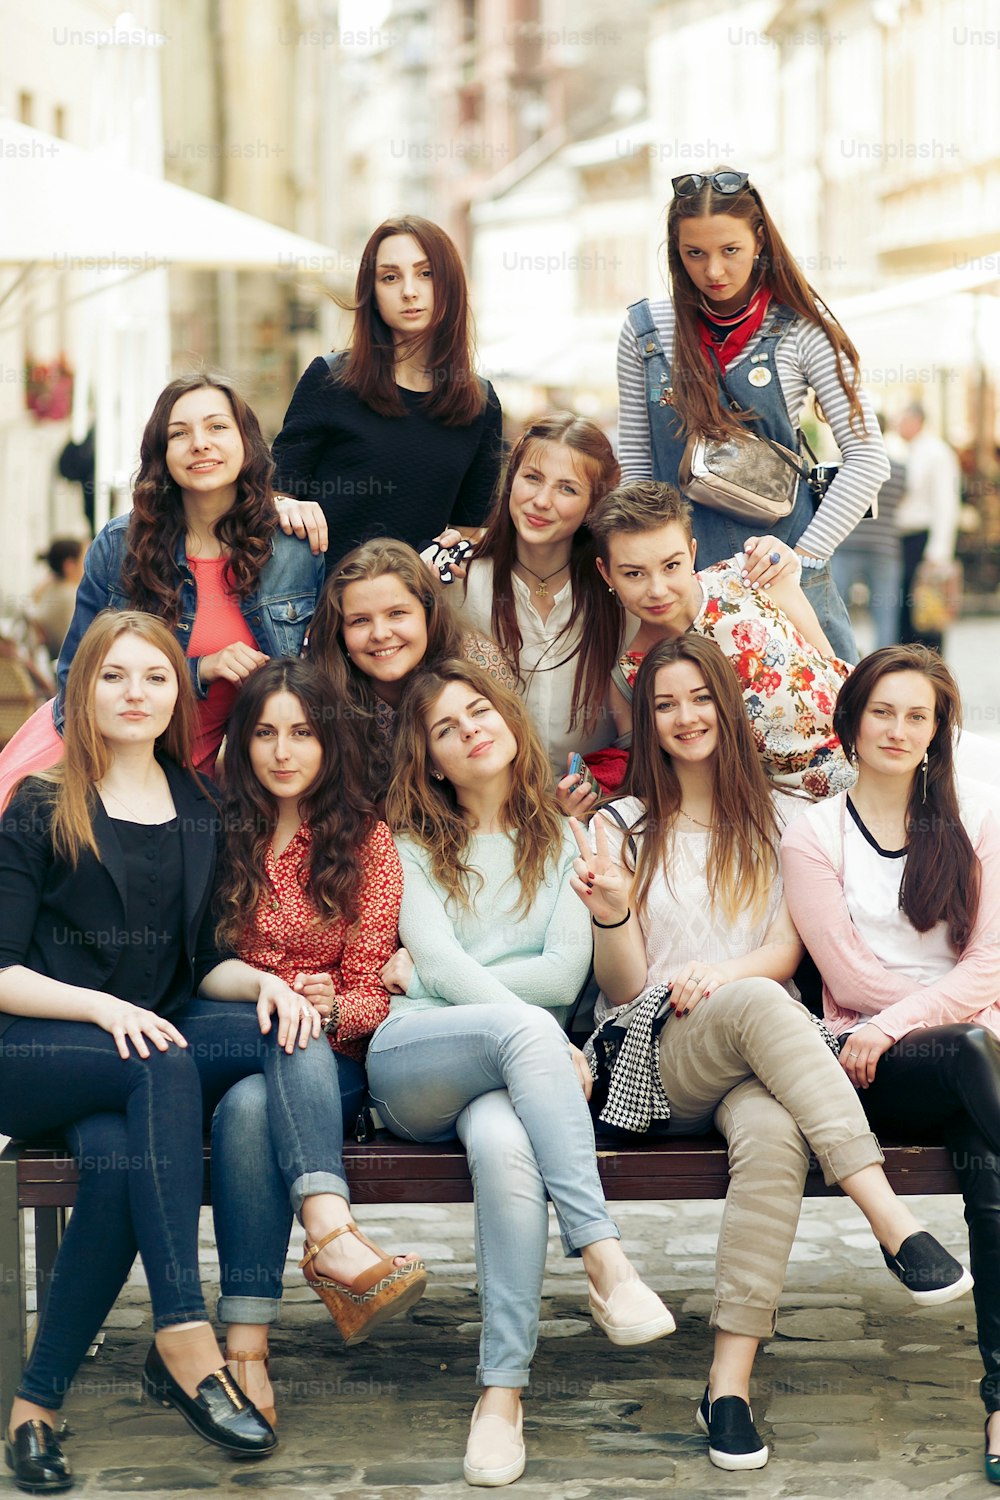 mulheres felizes elegantes hipsters moda vestido sorrindo e sentado no banco na rua da cidade da Europa, momentos alegres conceito de amizade